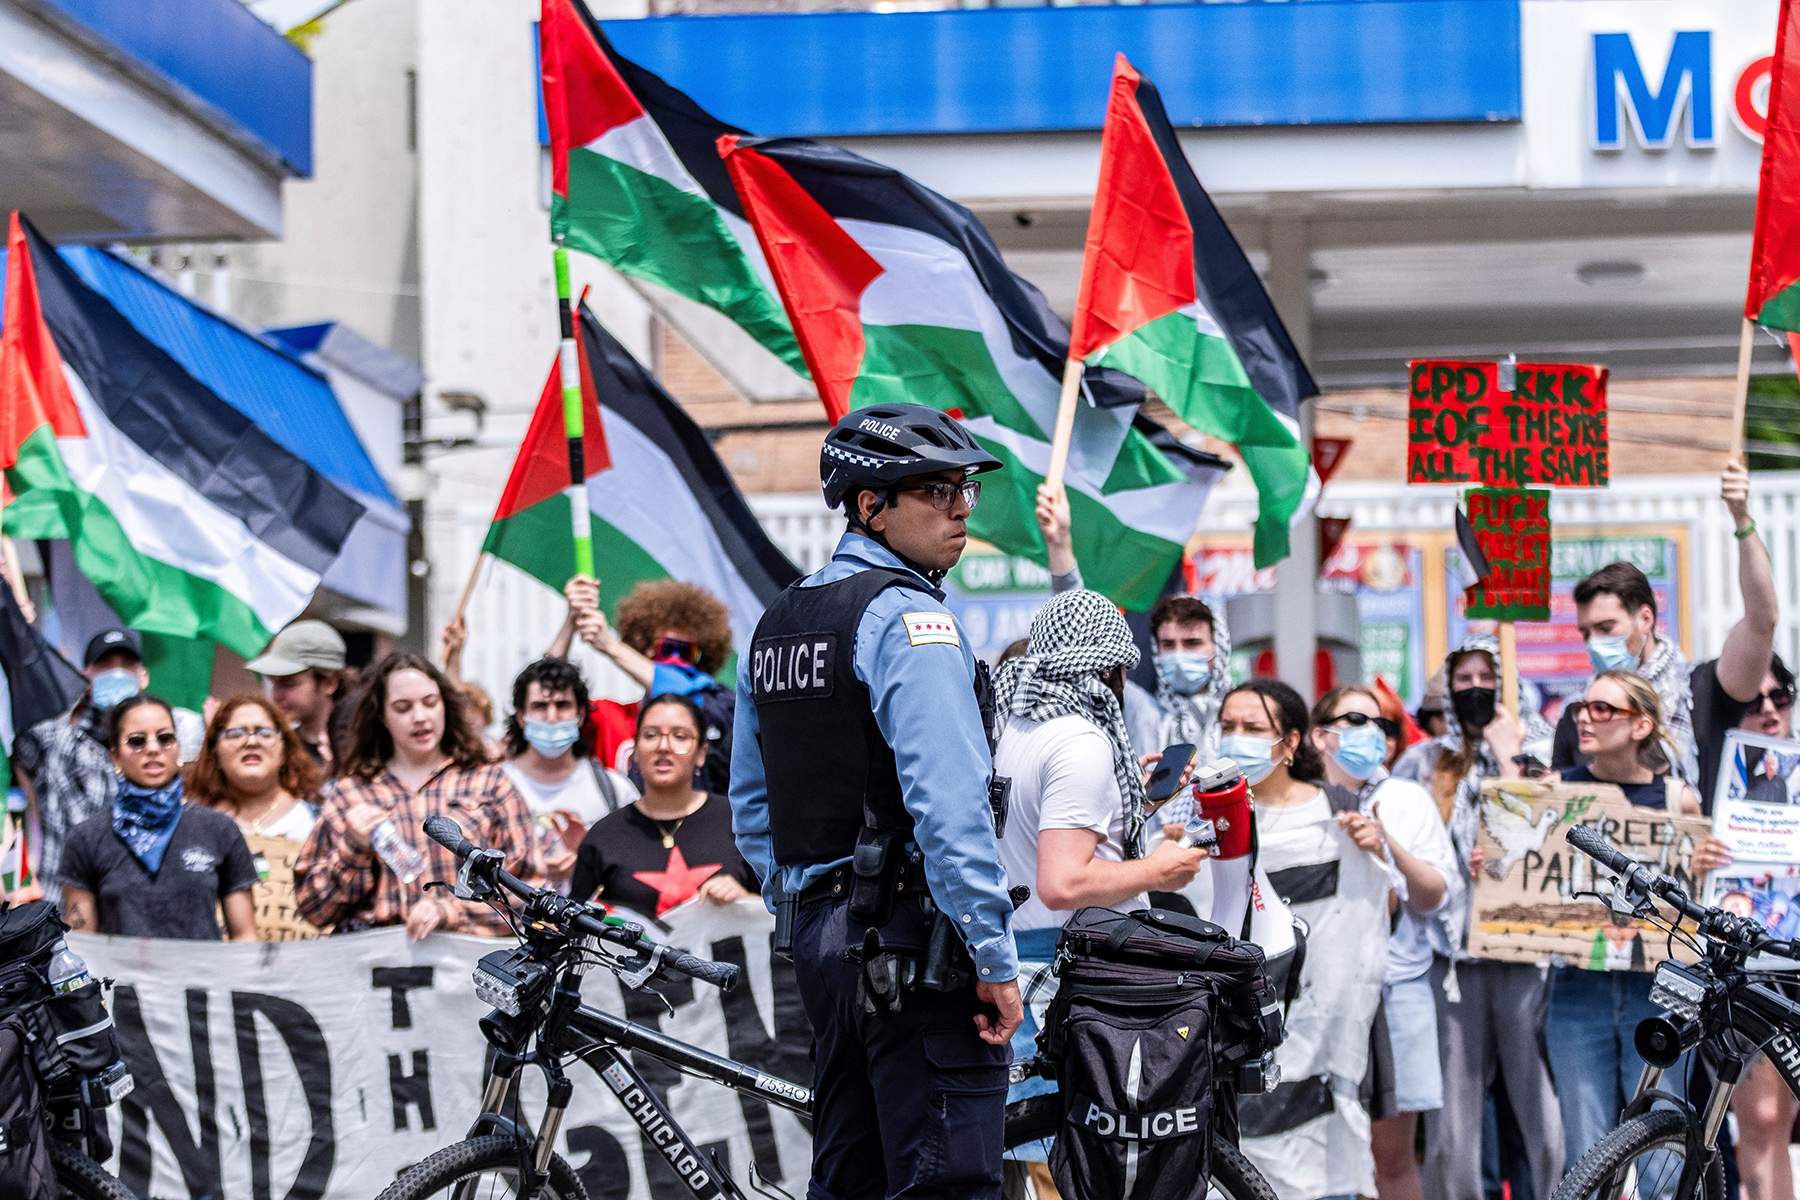 Police break up pro-Palestinian encampment at DePaul University in Chicago